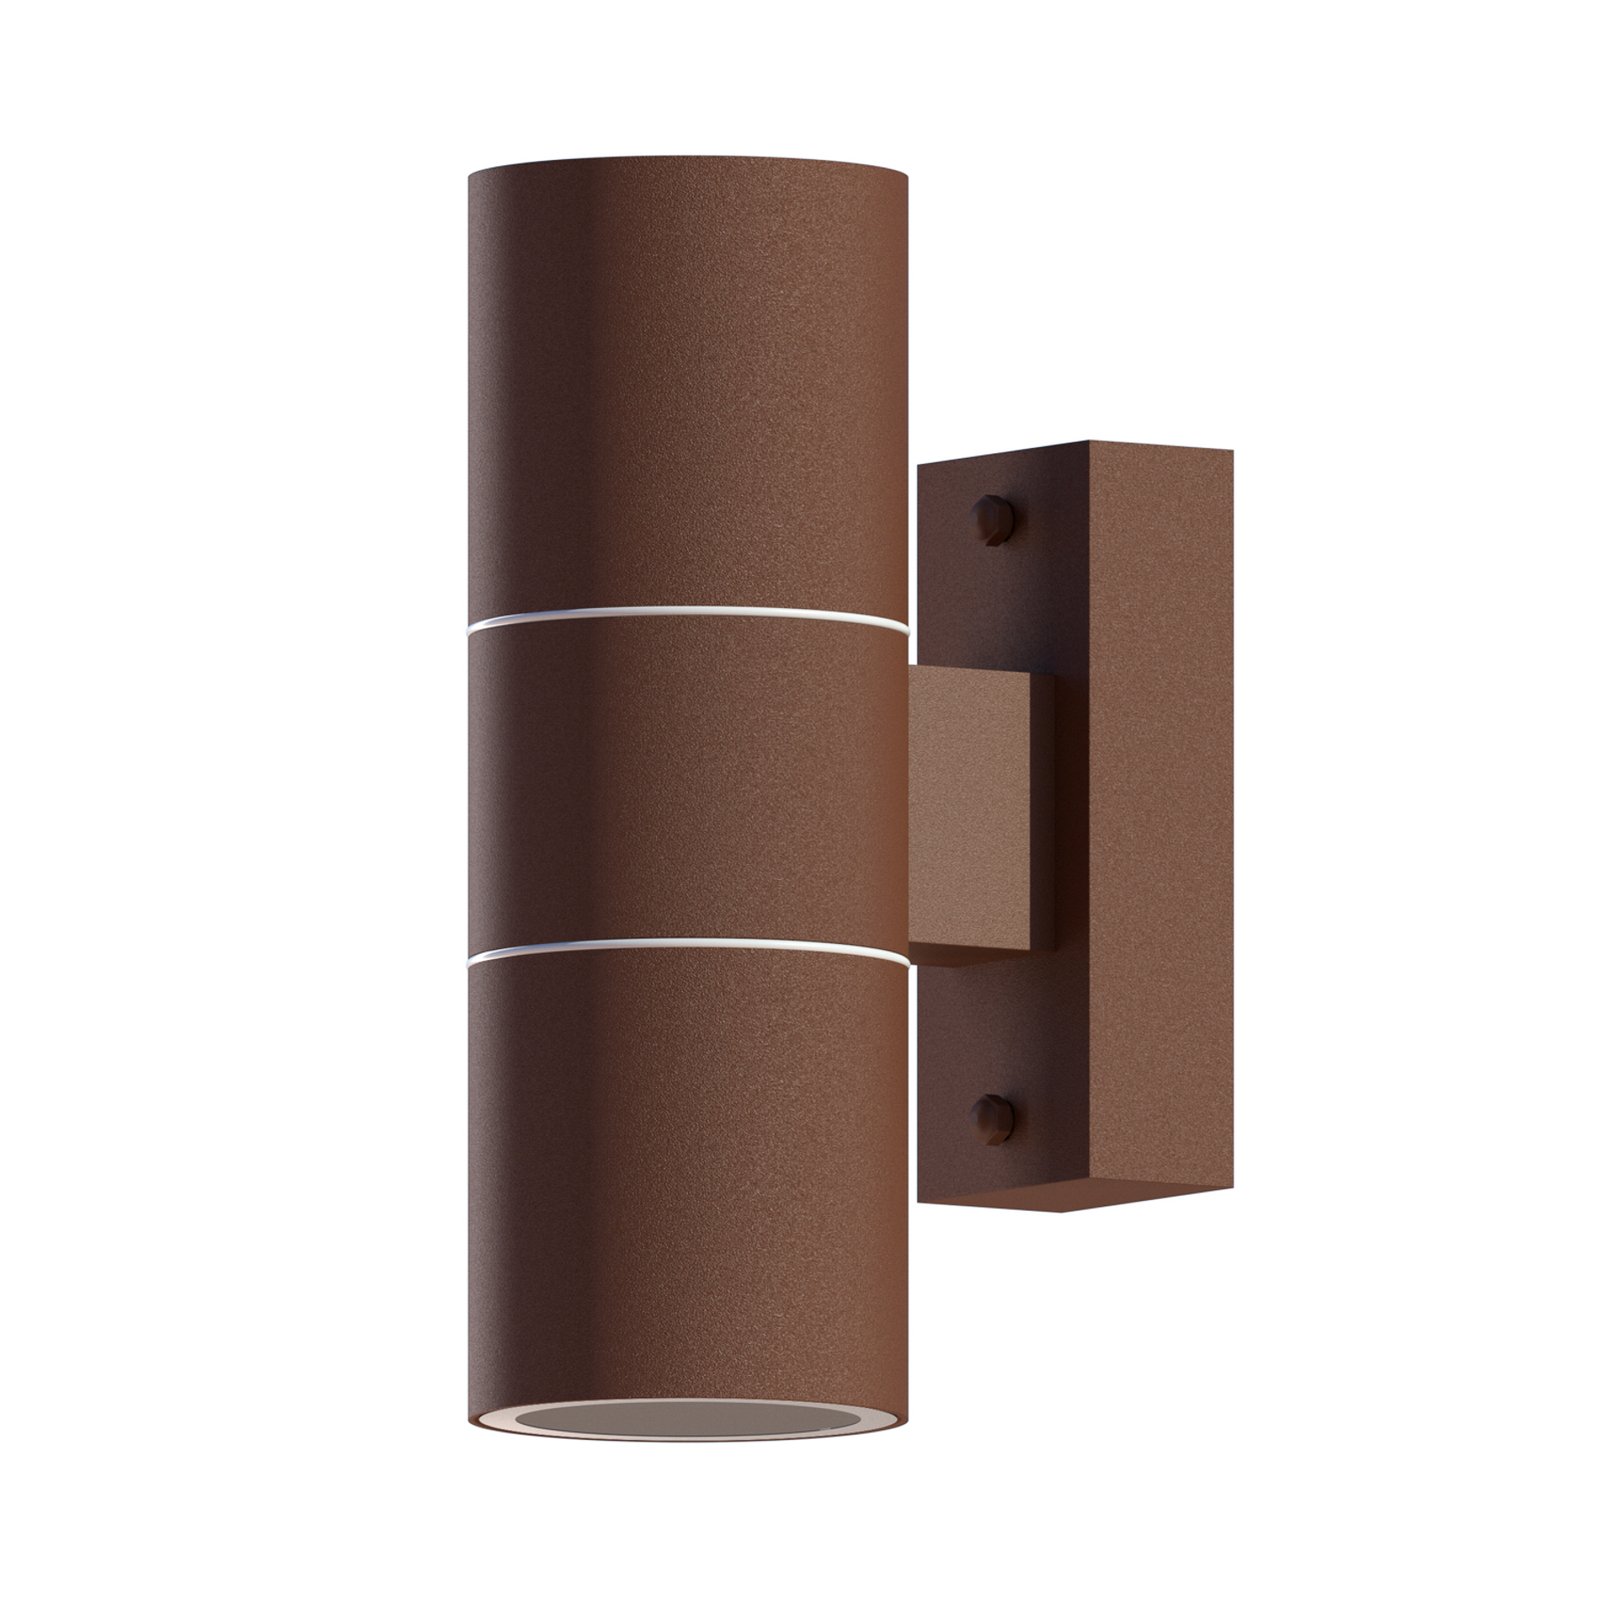 Calex outdoor wall lamp GU10 stainless steel up/down 17 cm, rust brown